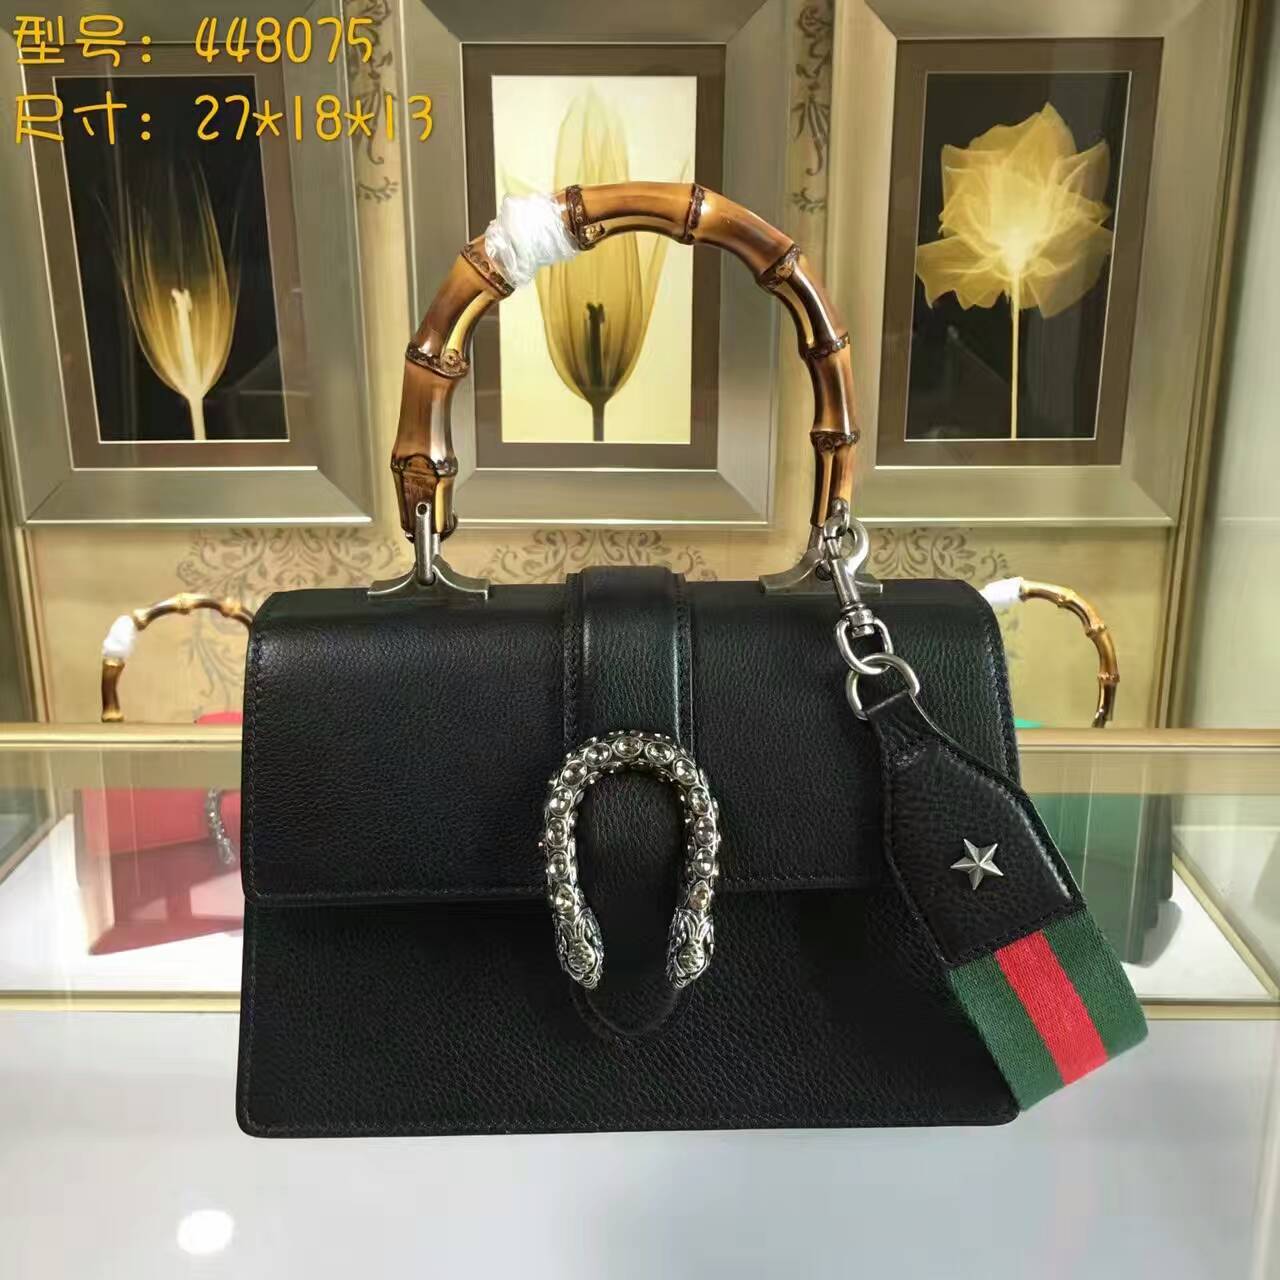 Gucci Dionysus leather top handle bag-448075-8